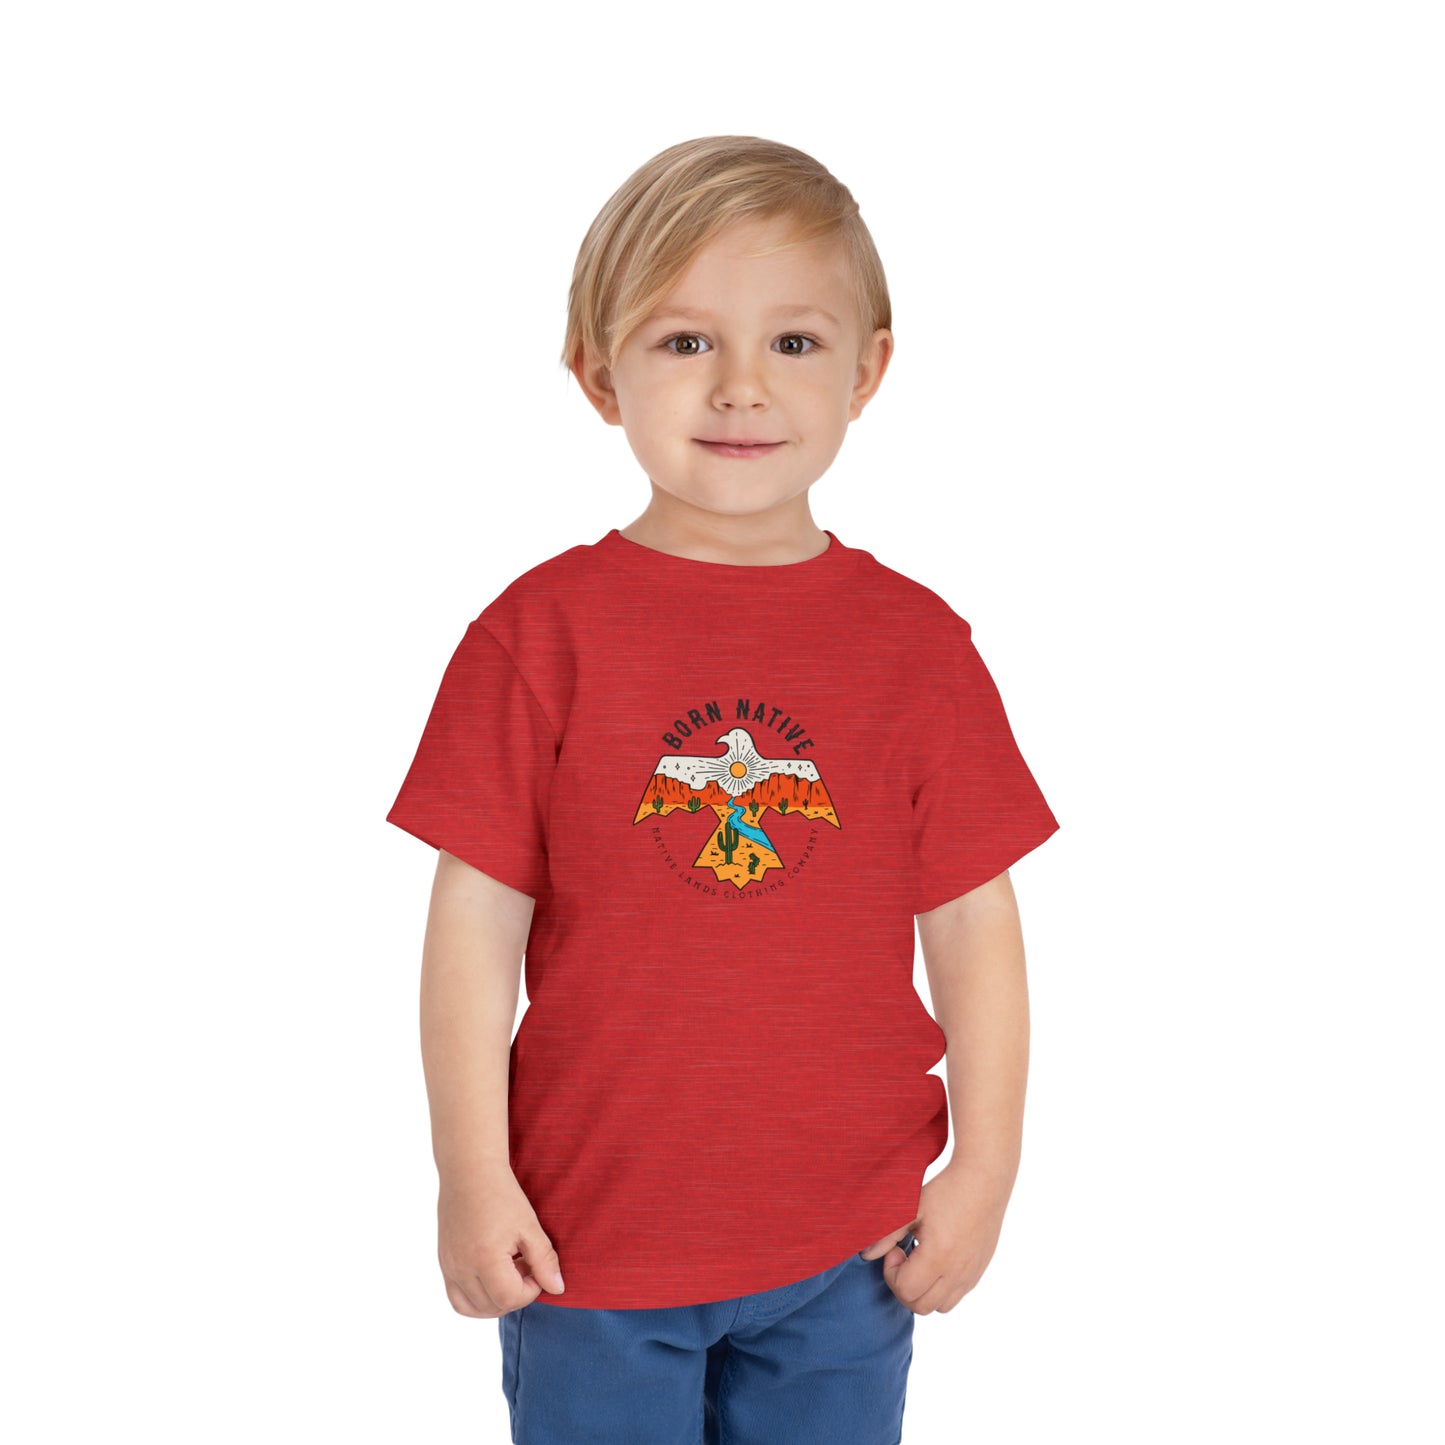 Toddler Born Native Shirt Bomuld Native American